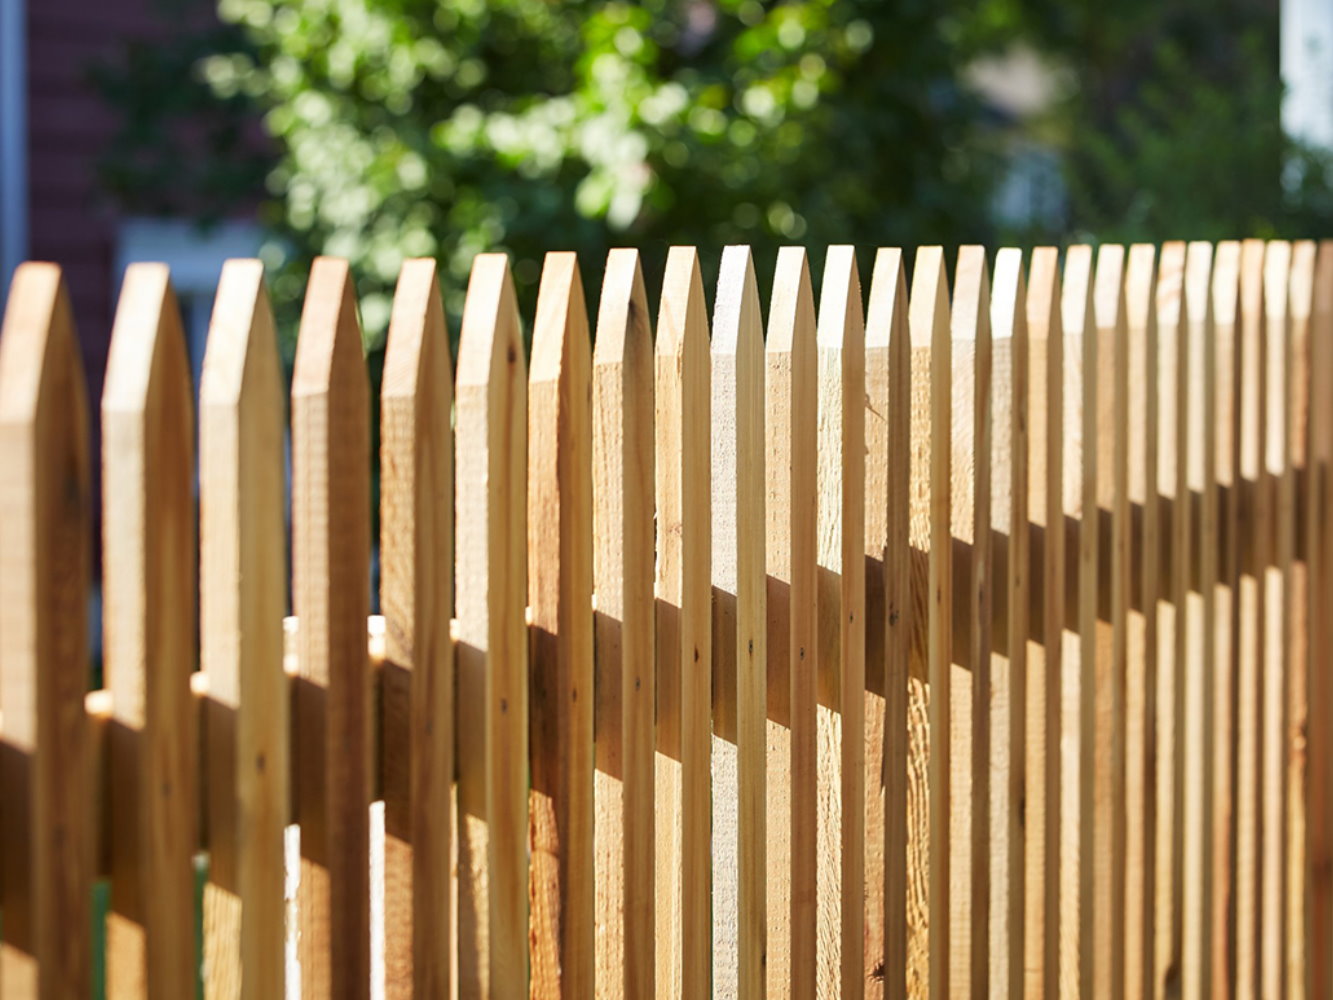 Cordele Georgia DIY Fence Installation